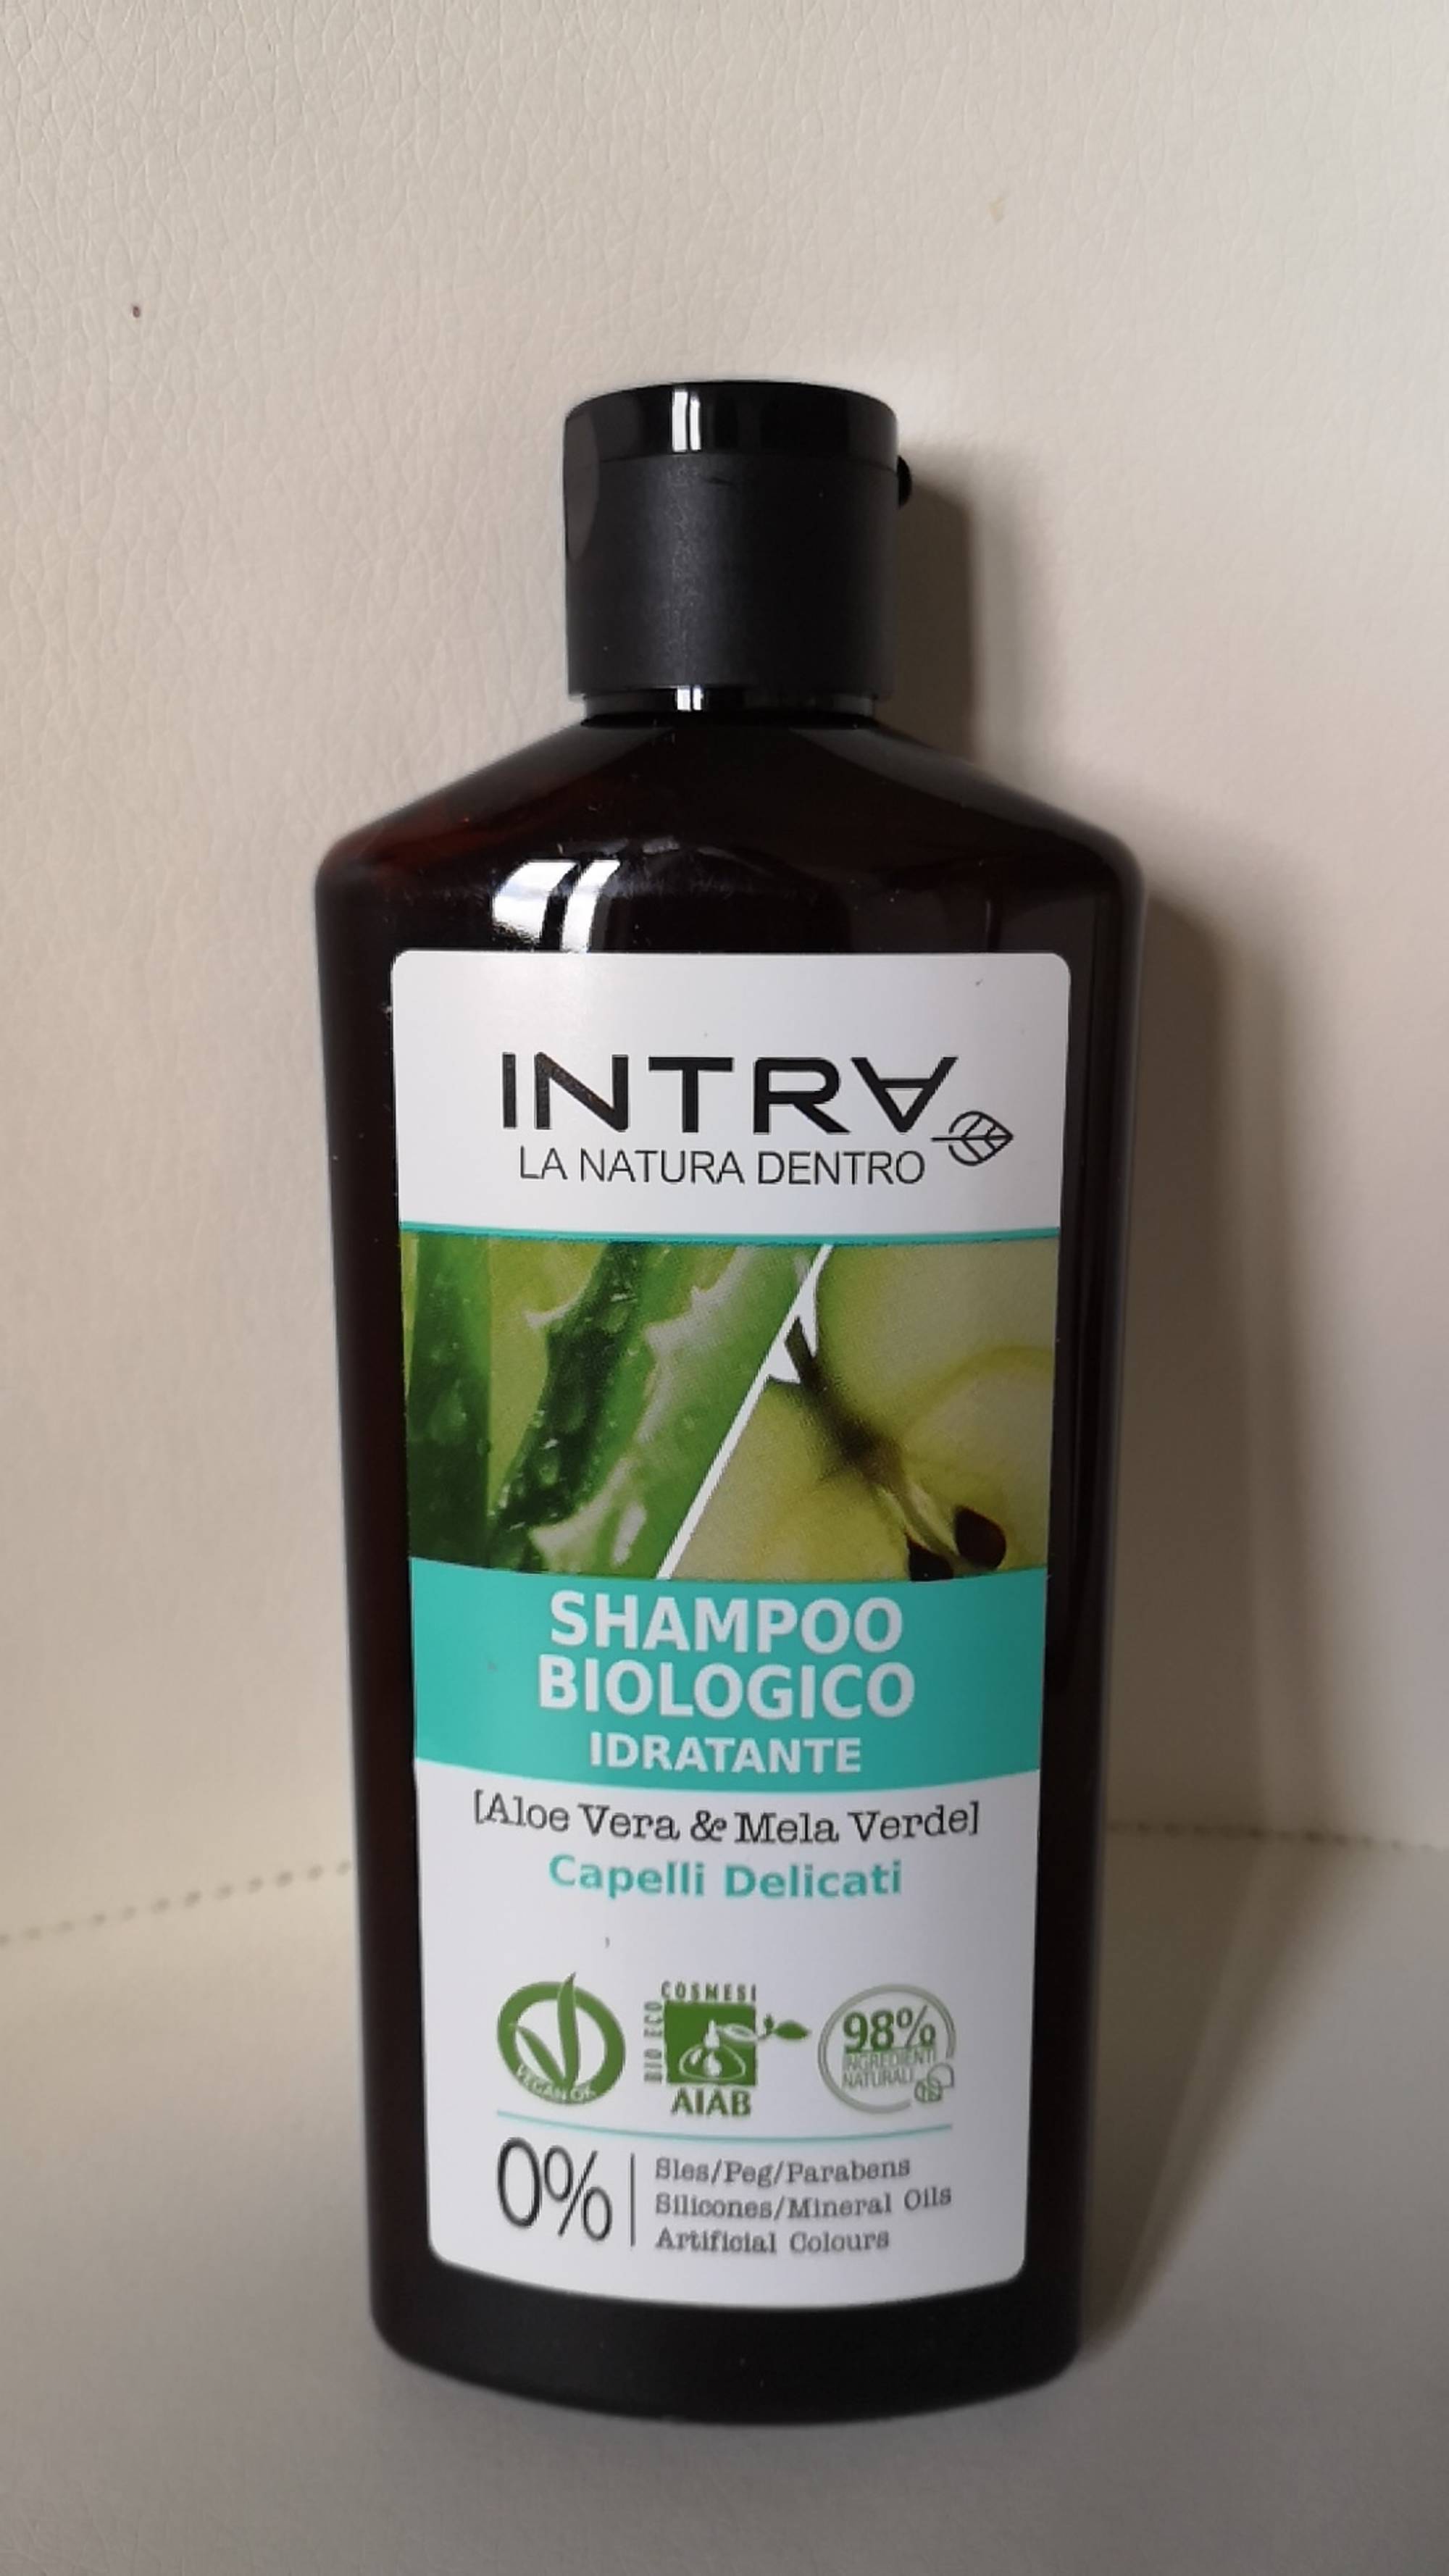 INTRA - Aloe vera & mela verde - Shampoo biologico idratante